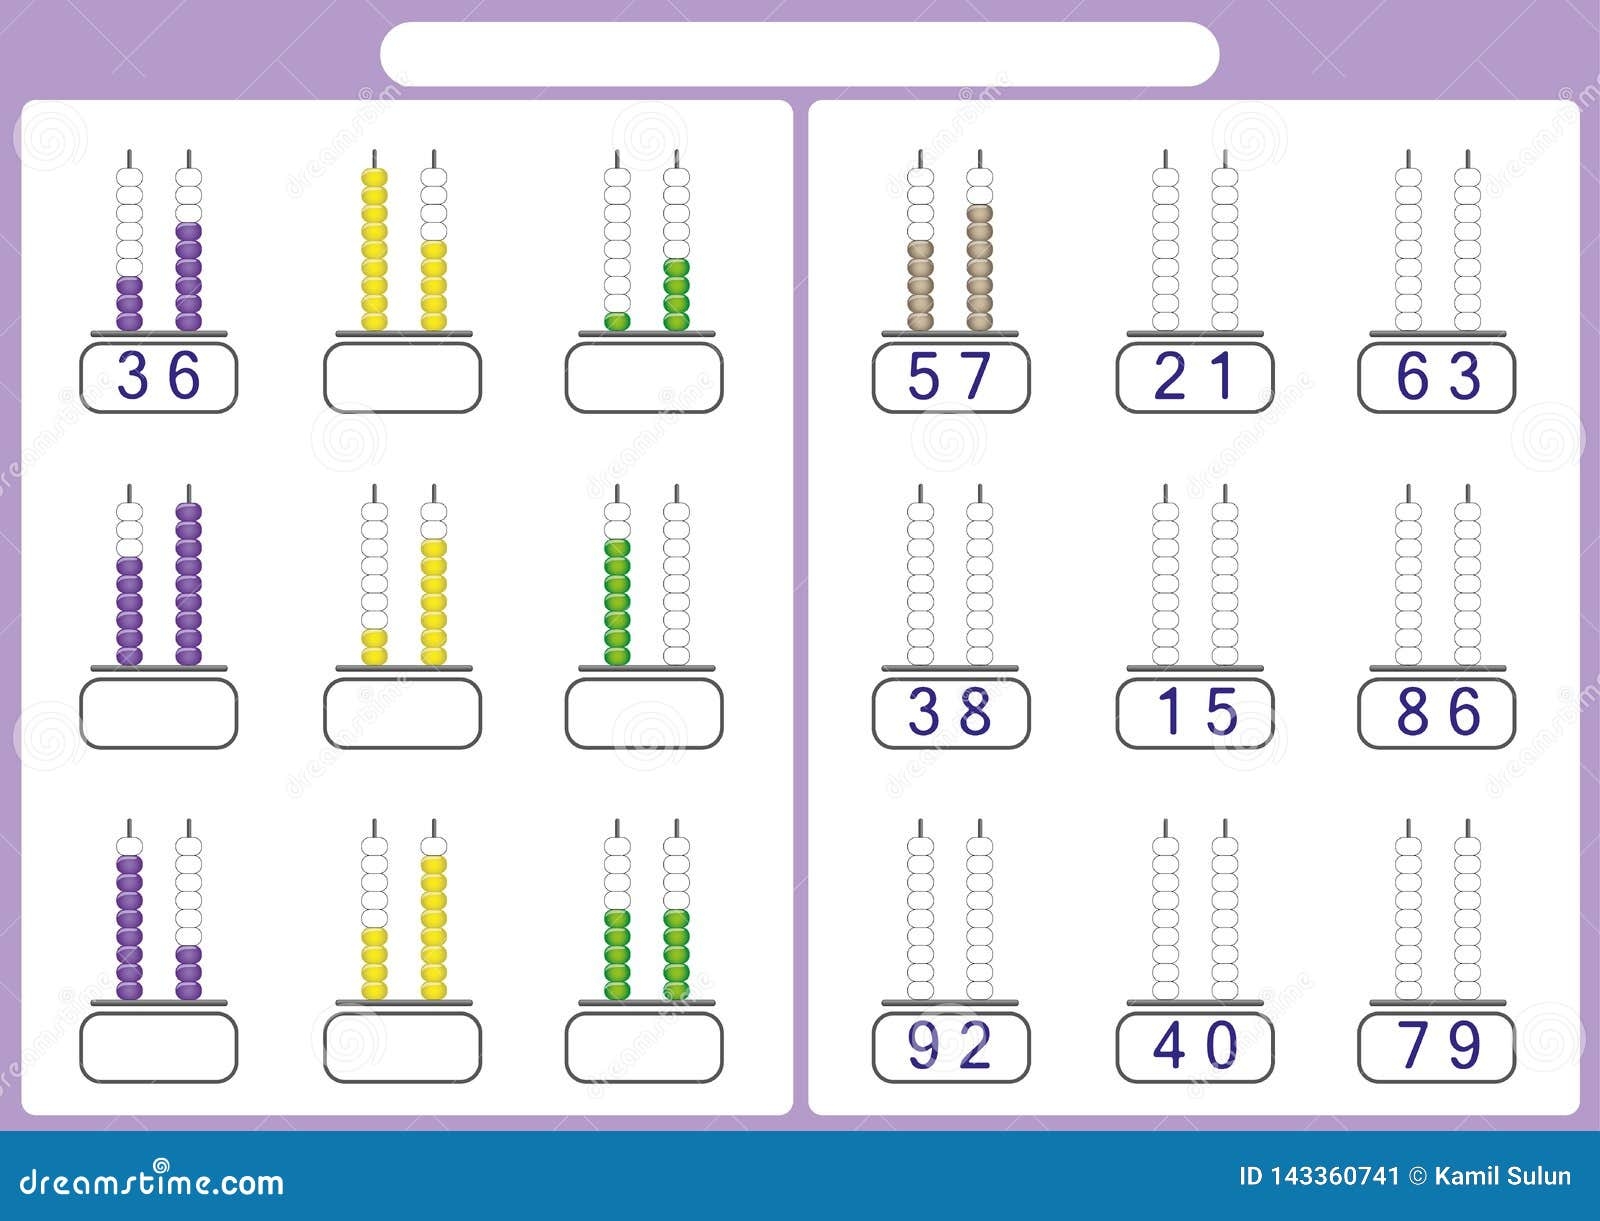 Abacus For Numbers Up To 99 Math Worksheet For Kids Stock Illustration Illustration Of Kindergarten Line 143360741 - Free Printable Abacus Worksheets